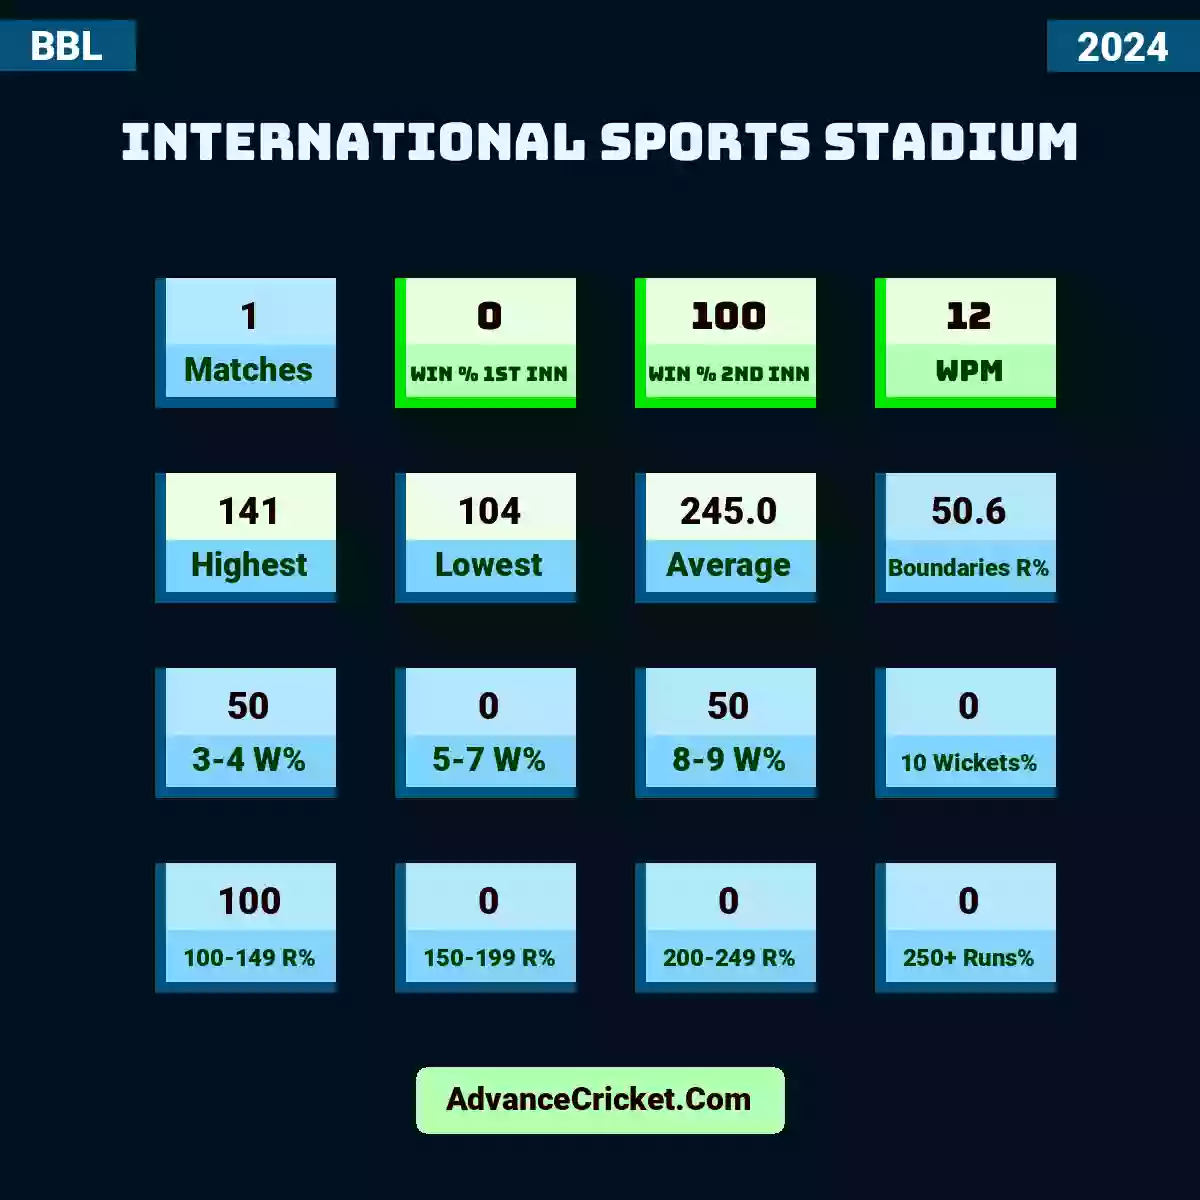 Image showing International Sports Stadium with Matches: 1, Win % 1st Inn: 0, Win % 2nd Inn: 100, WPM: 12, Highest: 141, Lowest: 104, Average: 245.0, Boundaries R%: 50.6, 3-4 W%: 50, 5-7 W%: 0, 8-9 W%: 50, 10 Wickets%: 0, 100-149 R%: 100, 150-199 R%: 0, 200-249 R%: 0, 250+ Runs%: 0.